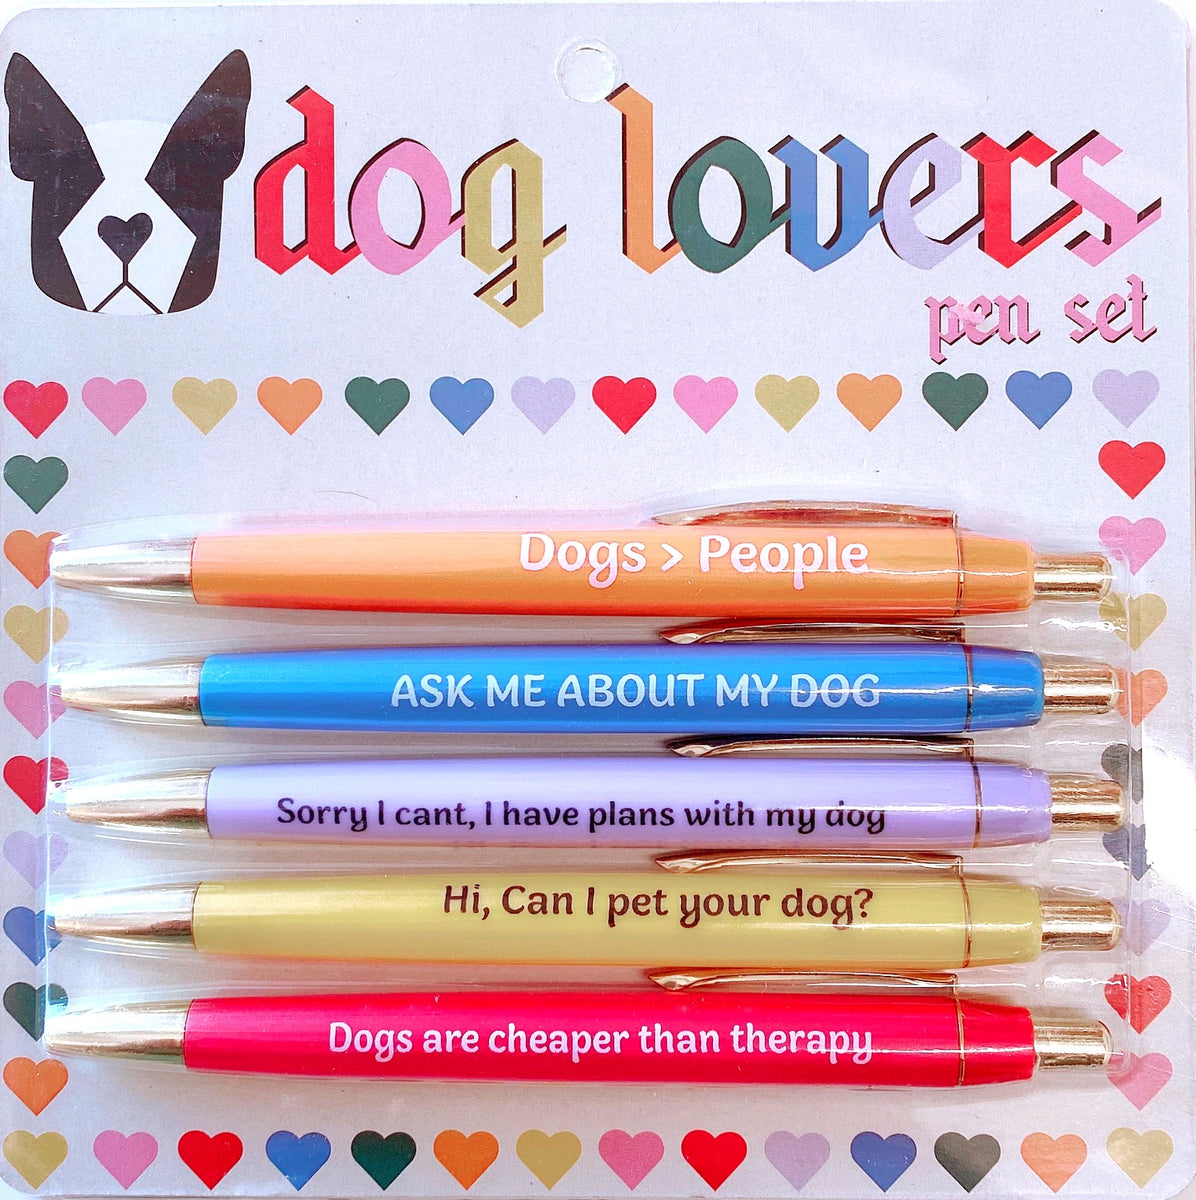 Dog Lover Pen Set Edition, Pens, Pen Set, Funny Pens – Blazed Candle Co.